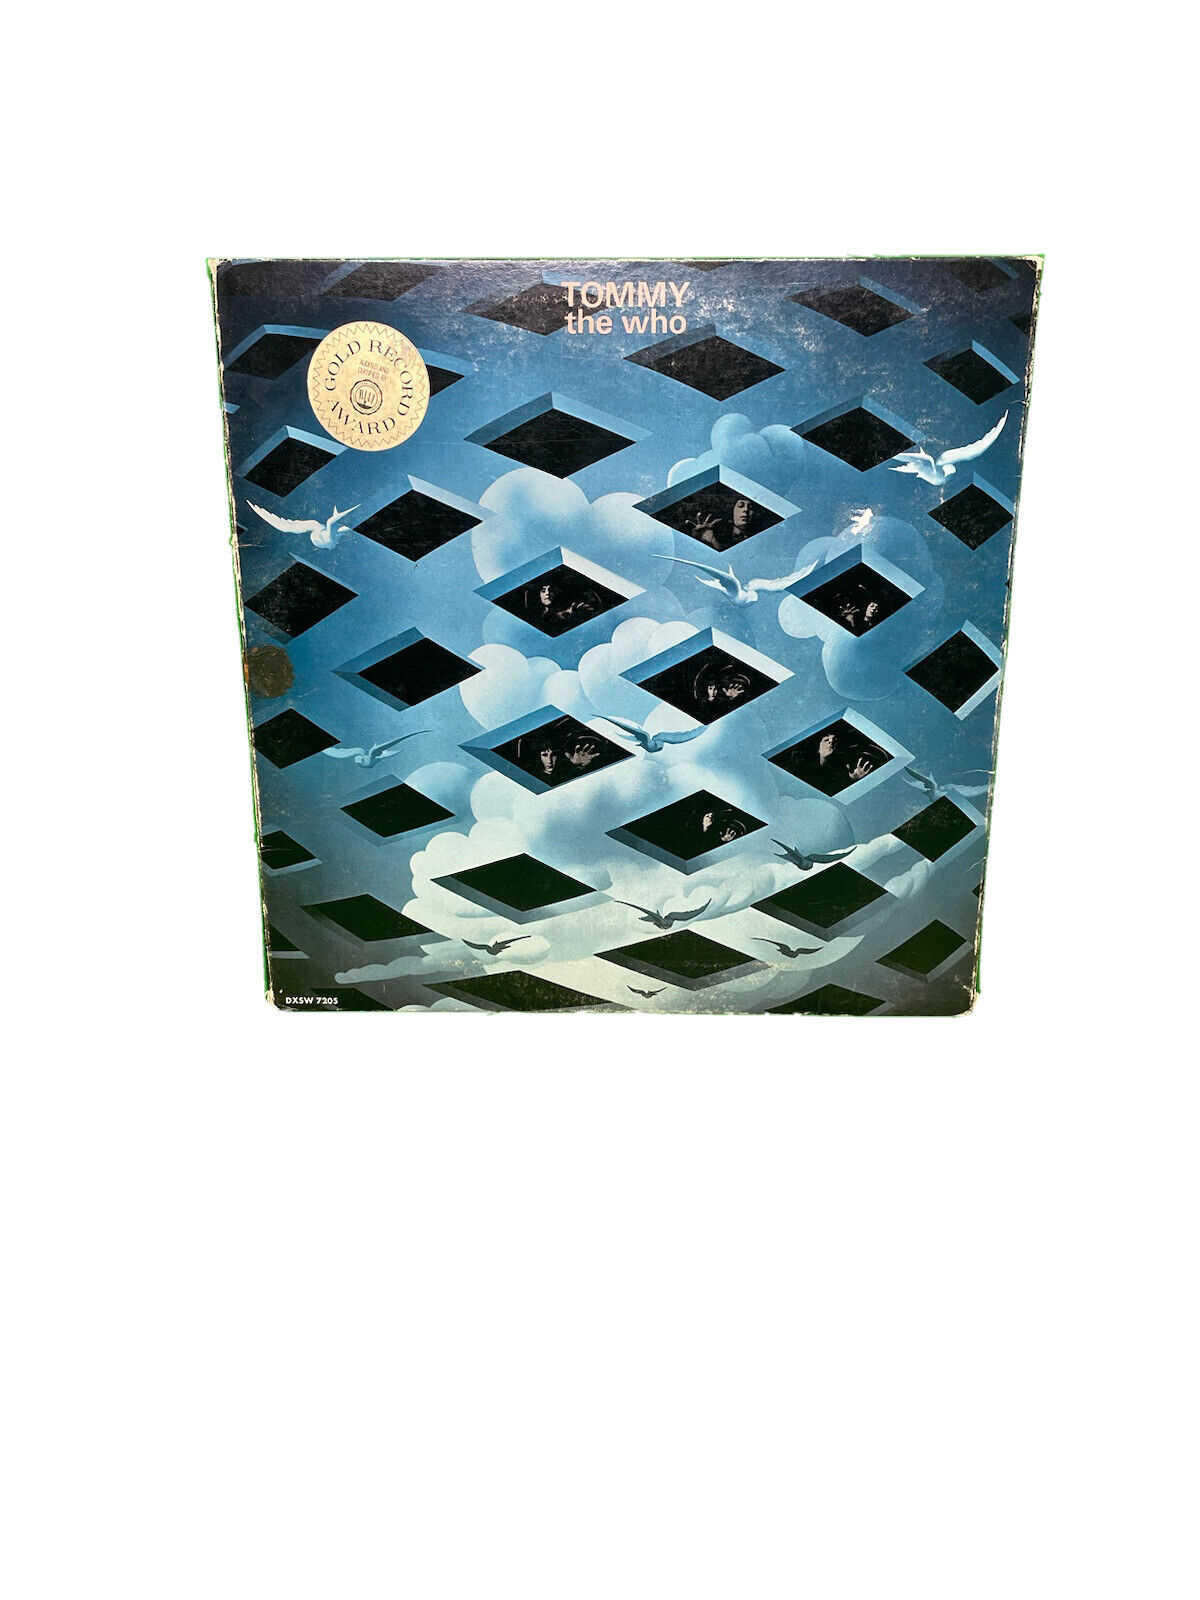 Lp THE WHO - TOMMY 2 LP EX VINYLS Original Decca DXSW 7205 G+ G+ Gold Record Award